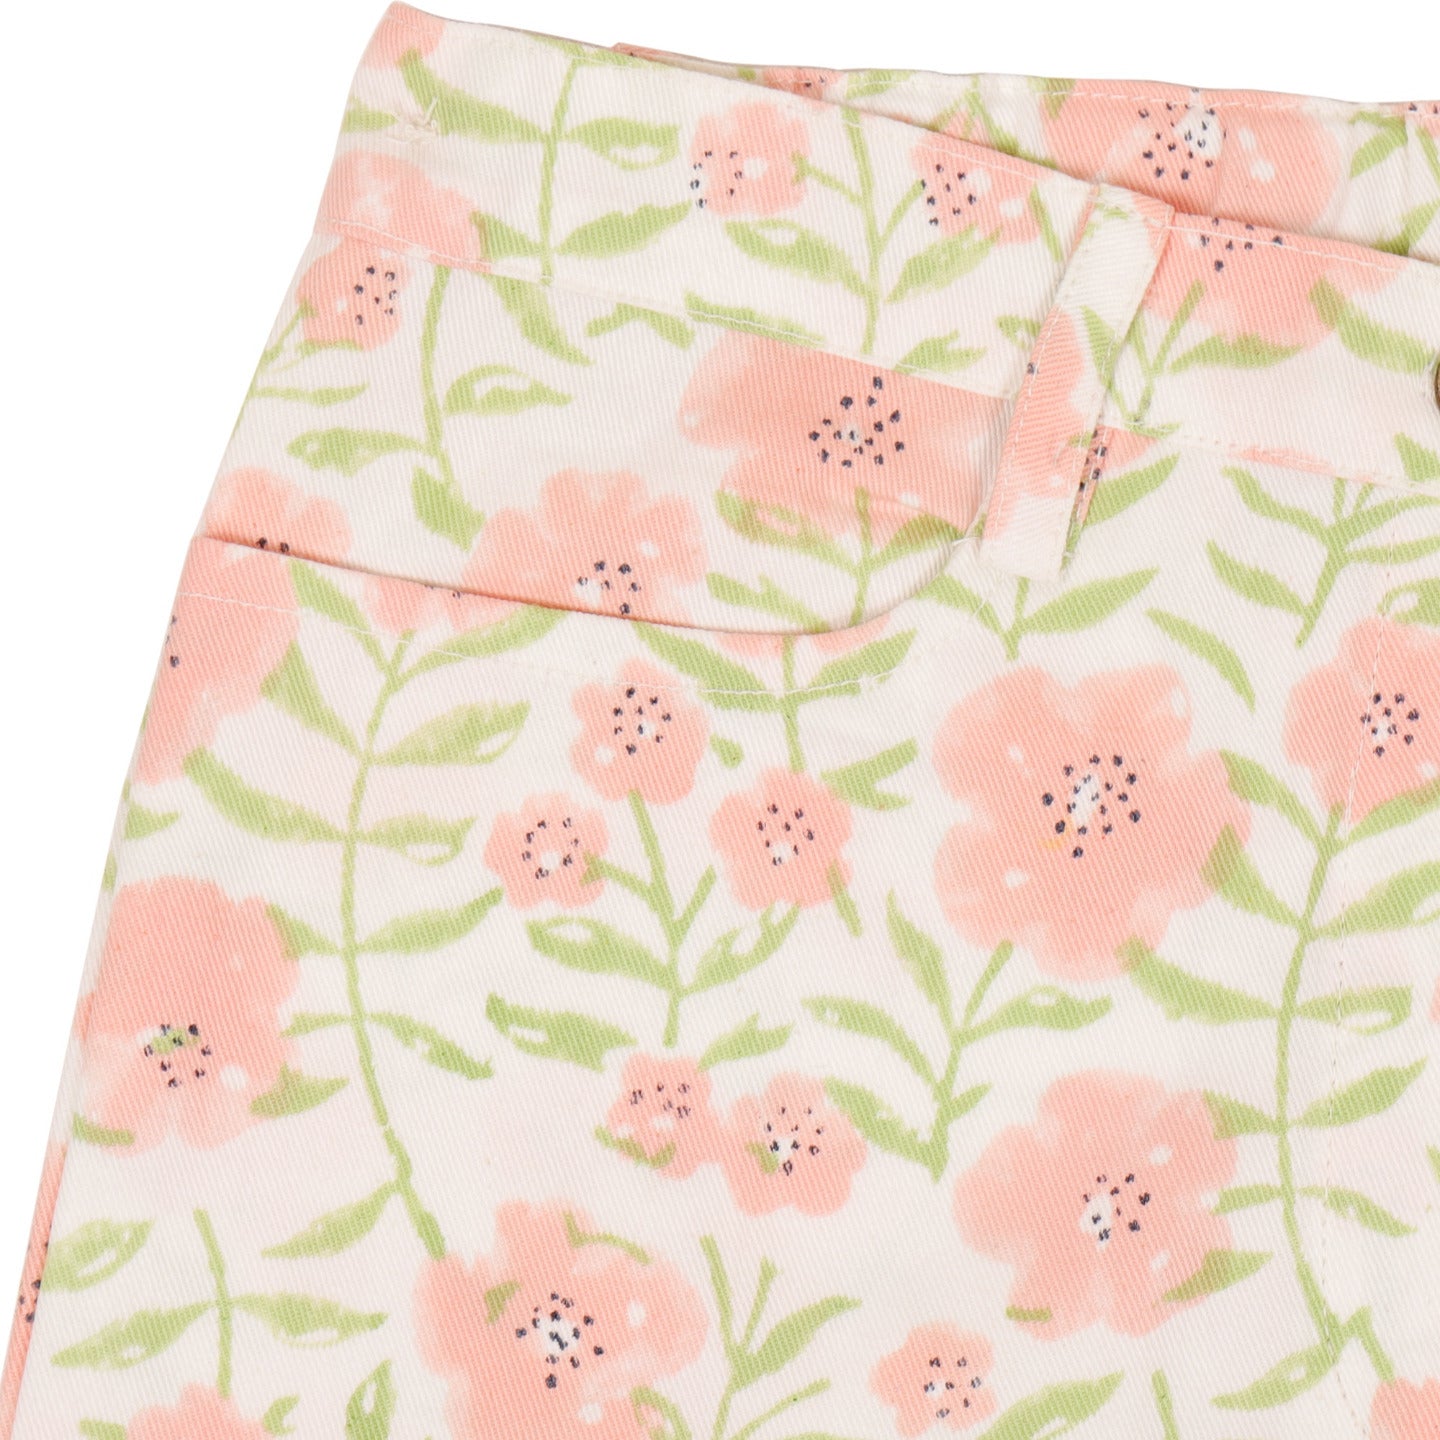 Block printed twill shorts Floral Pink